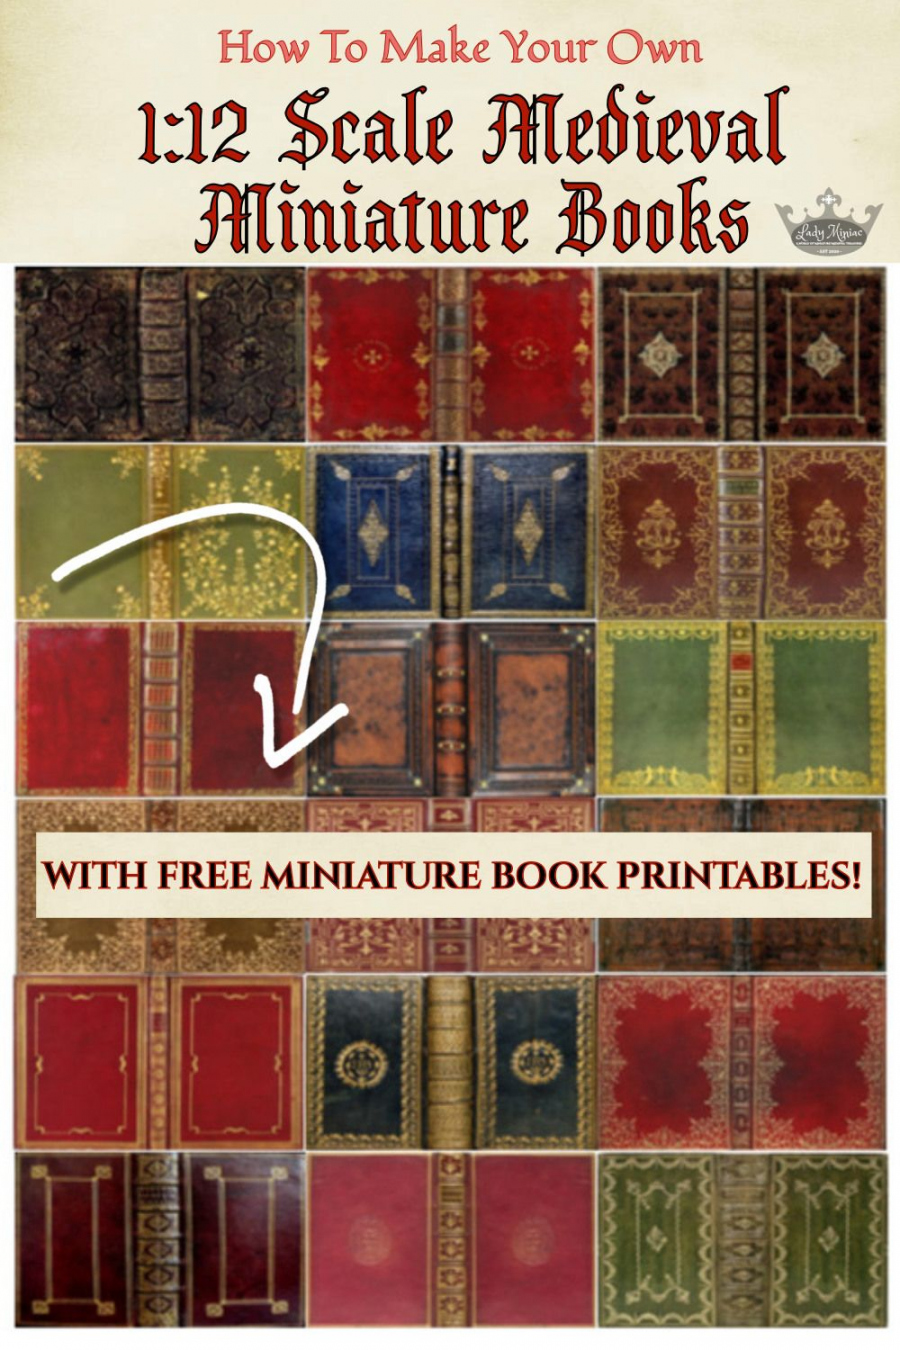 FREE printables - make your own miniature books in :2 scale  - FREE Printables - Free Printable Miniature Books